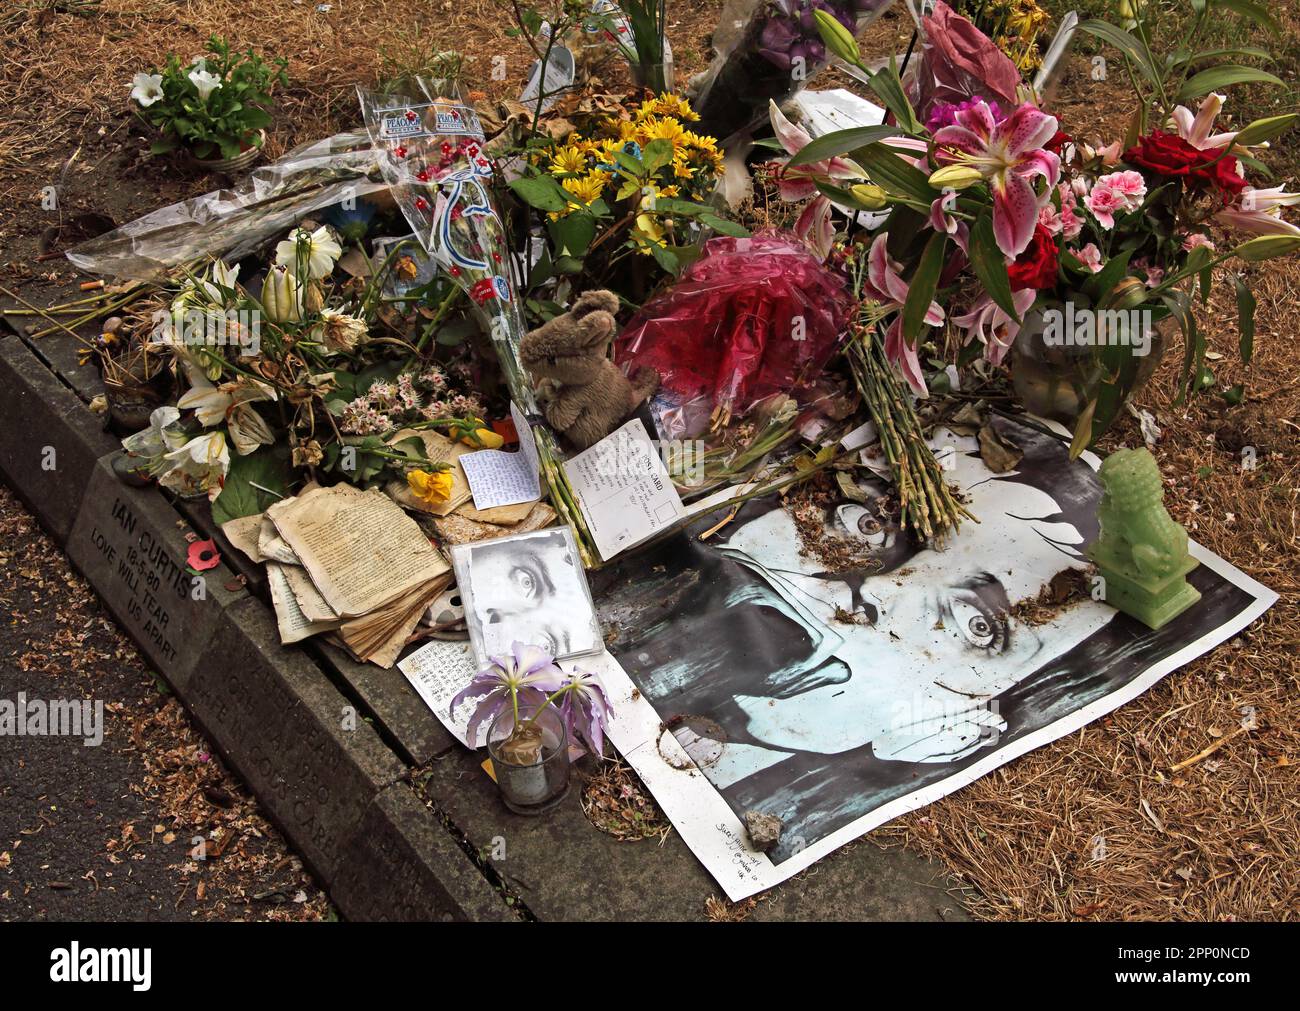 Ian Curtis 18-5-80 Love will Tear US Apart, Memorial stone, Macclesfield Crematorium, Cheshire, England, UK Stockfoto